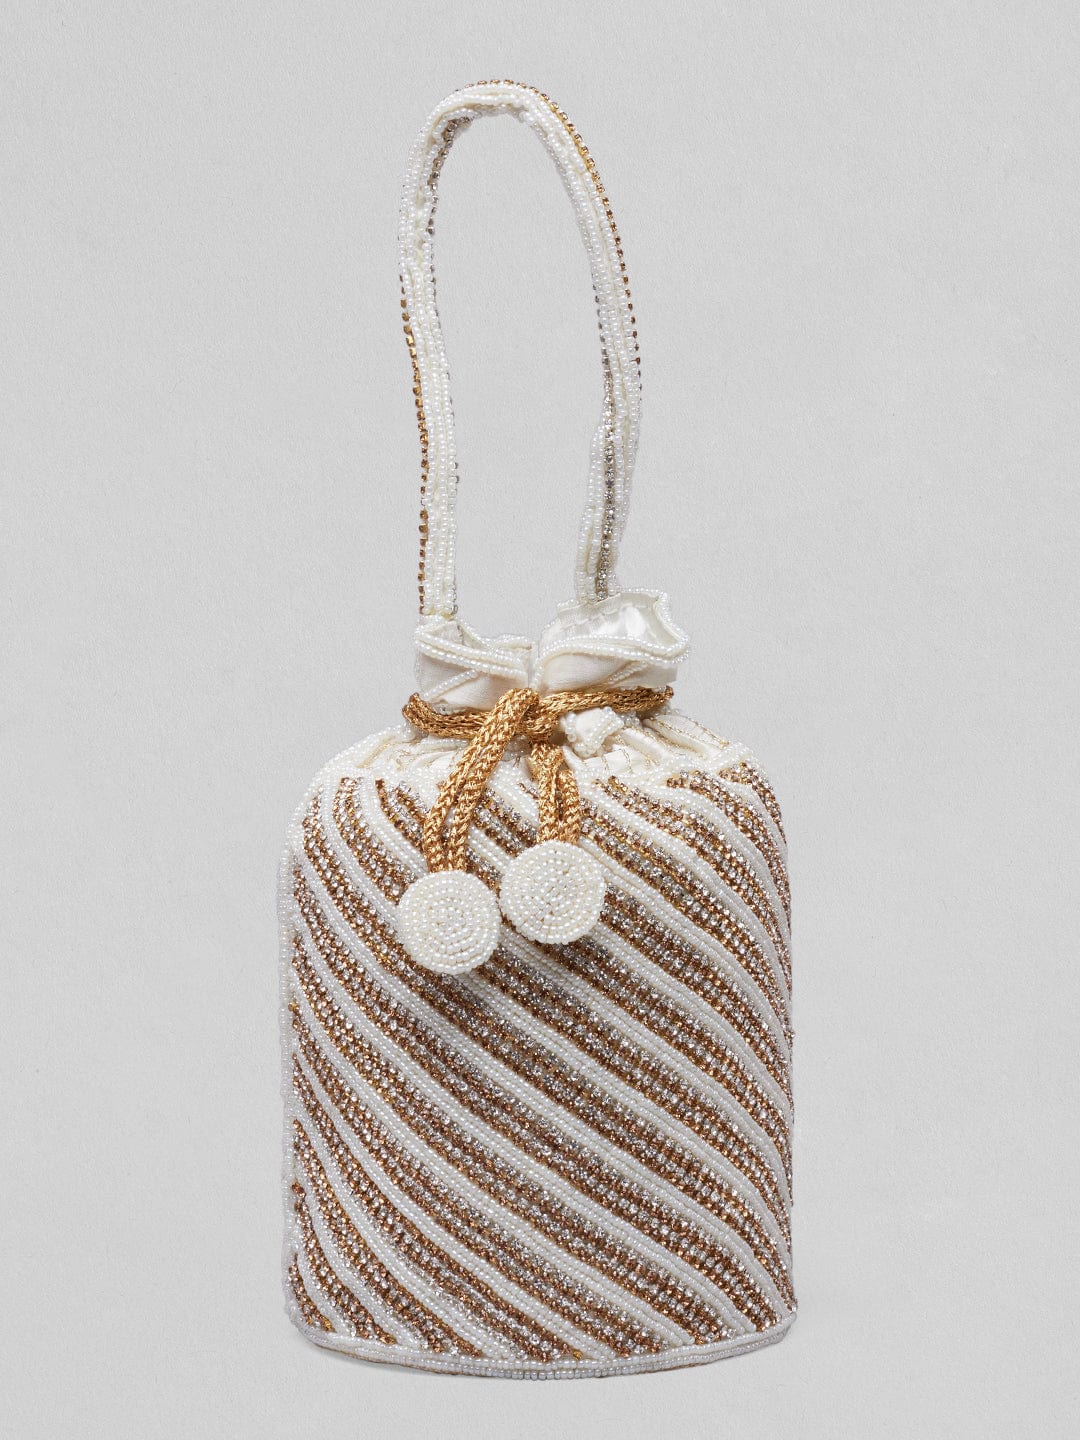 Rubans White Coloured Potli Bag With Golden Embroided Design. Handbag & Wallet Accessories